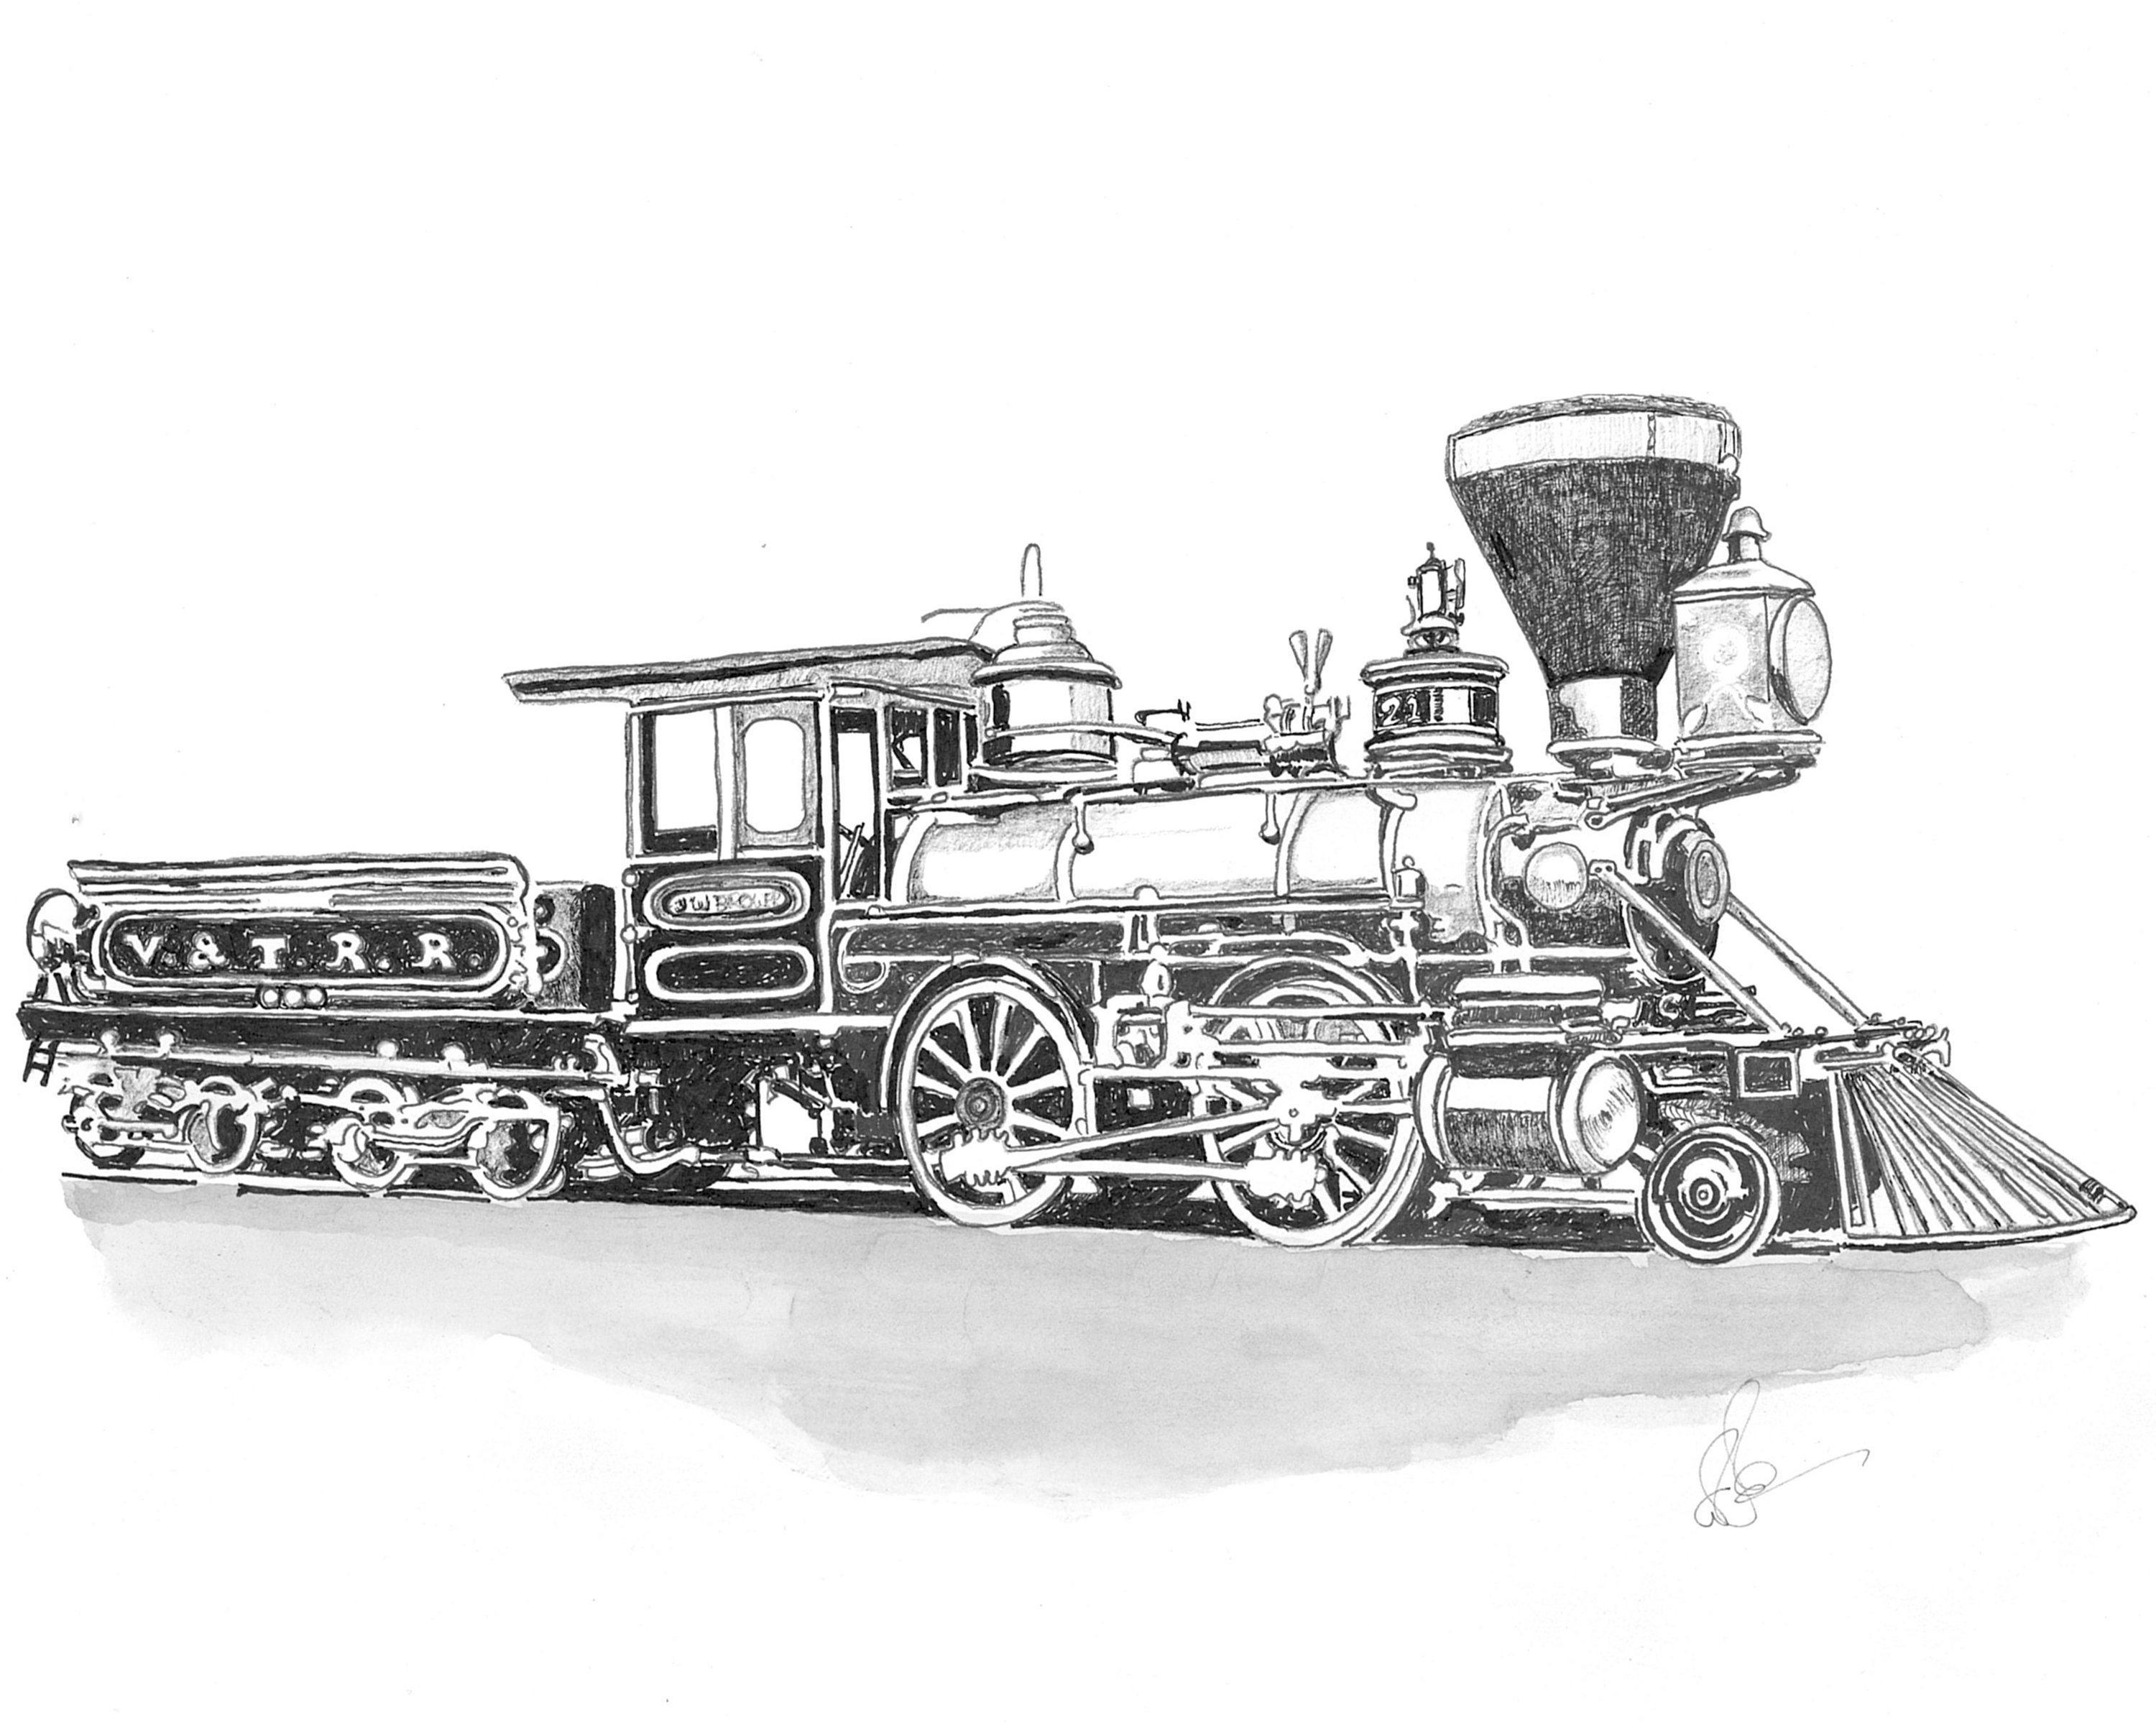 Train Art Print V T Railroad Virginia City Truckee Engine 21 photo photo